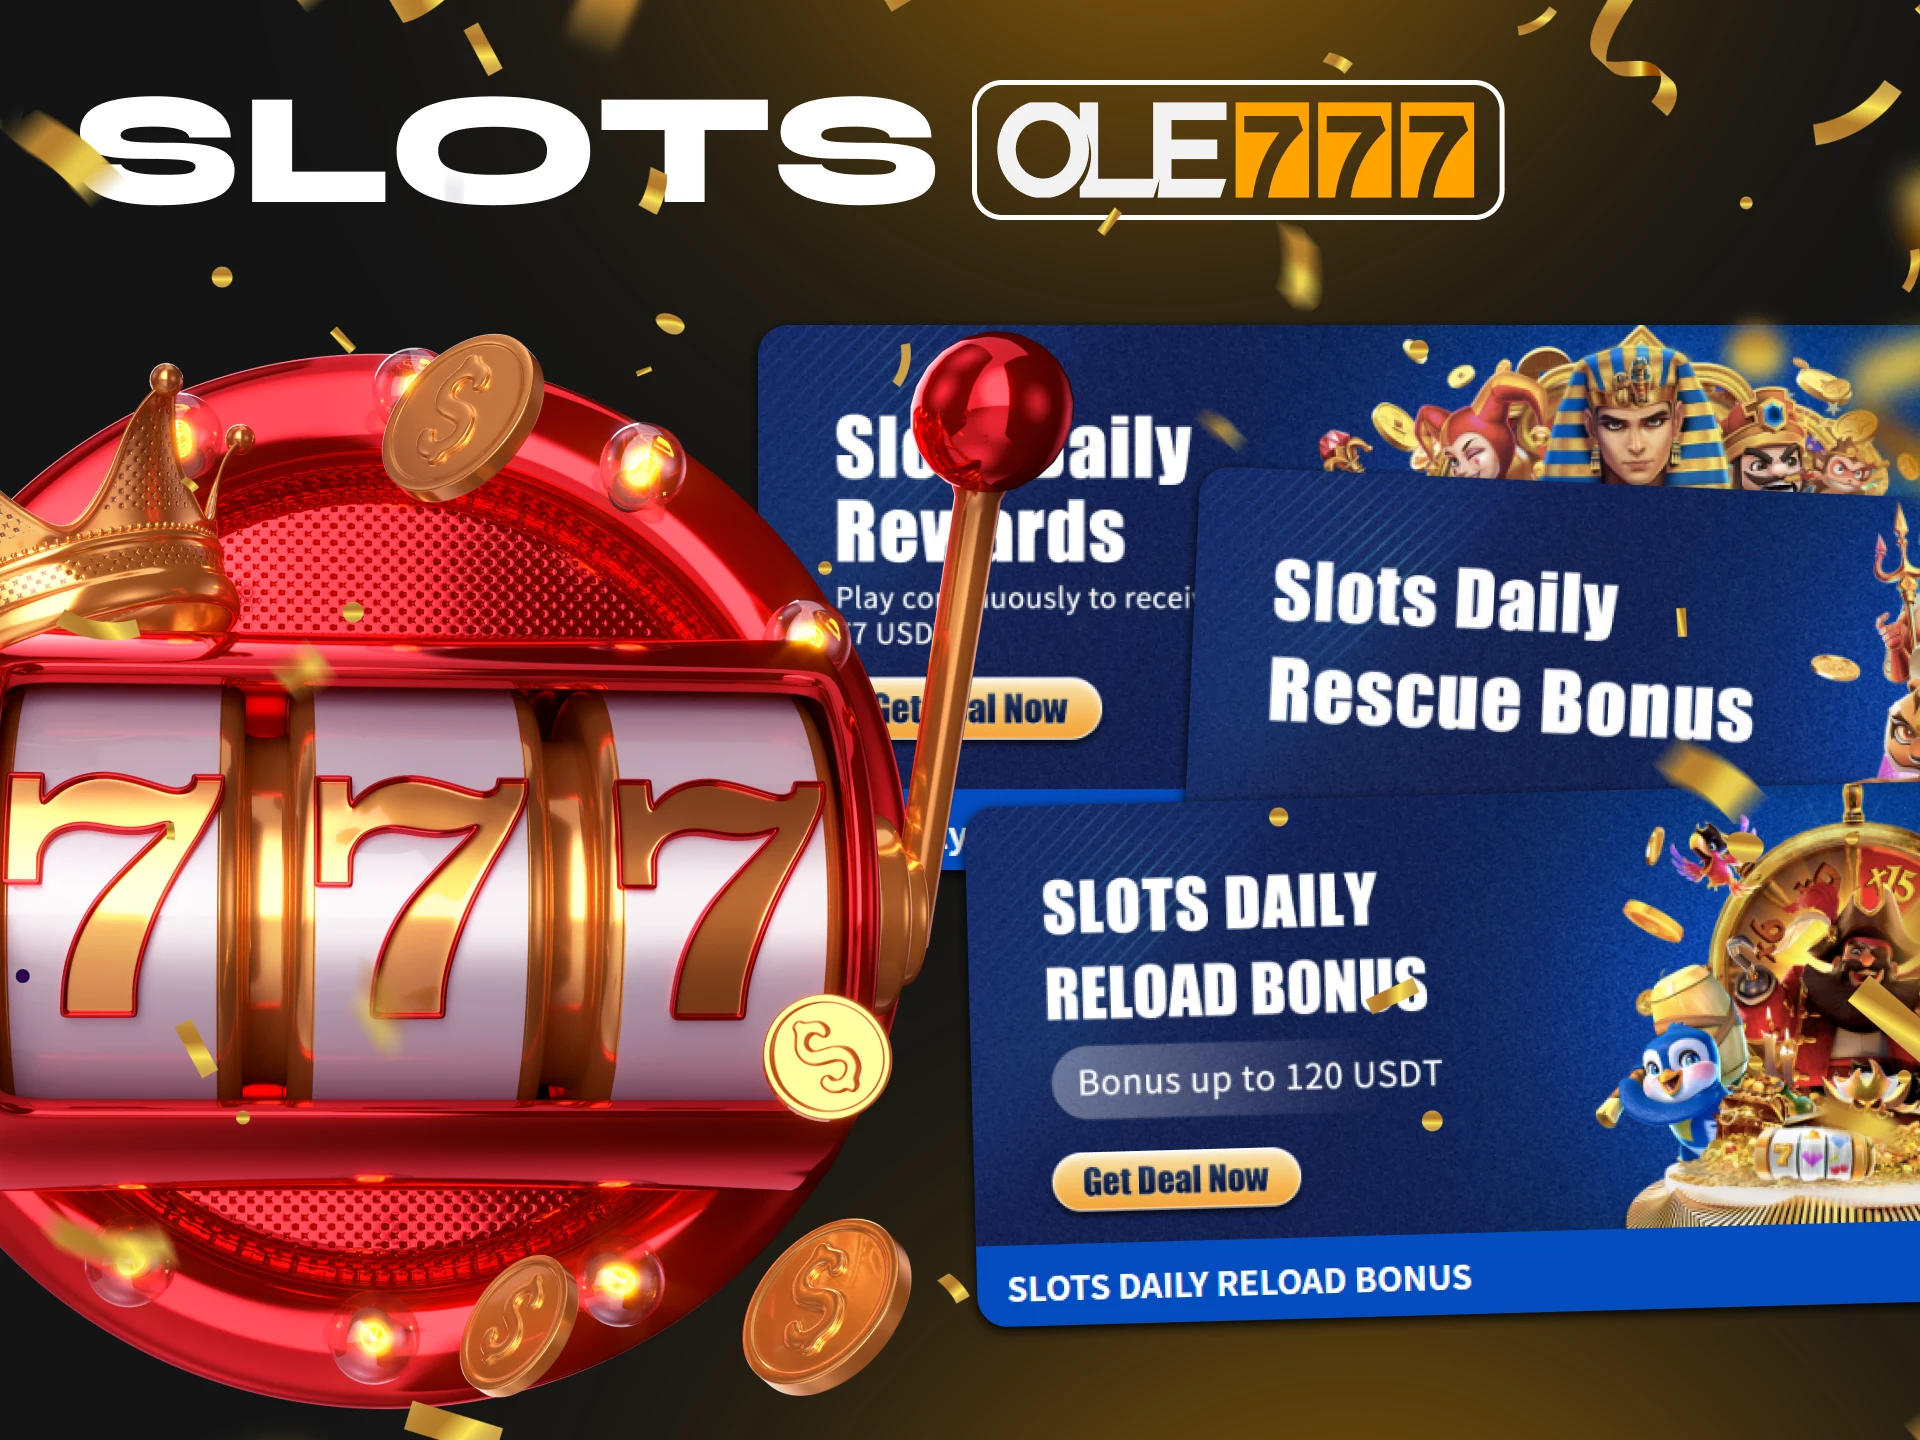 Ole777 casino offers many slots bonuses for every taste.